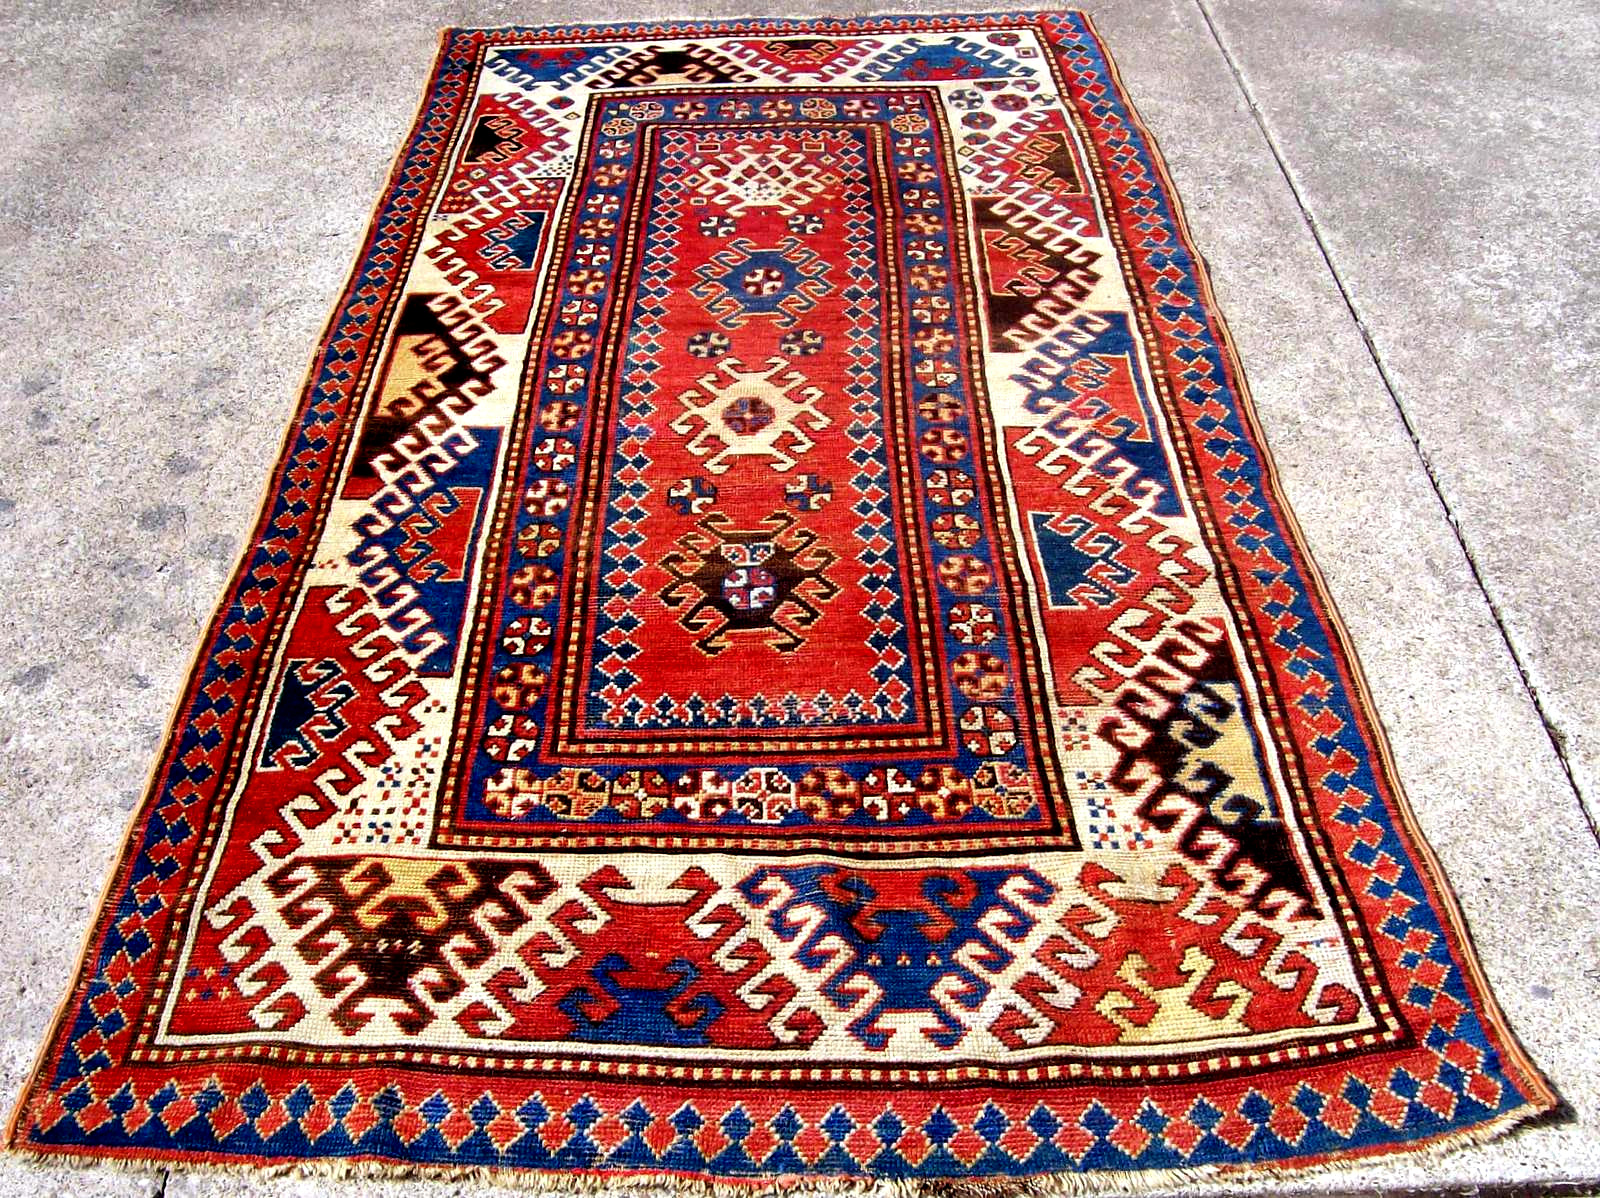 Bordjalou Kazak Caucasian rug circa 1870